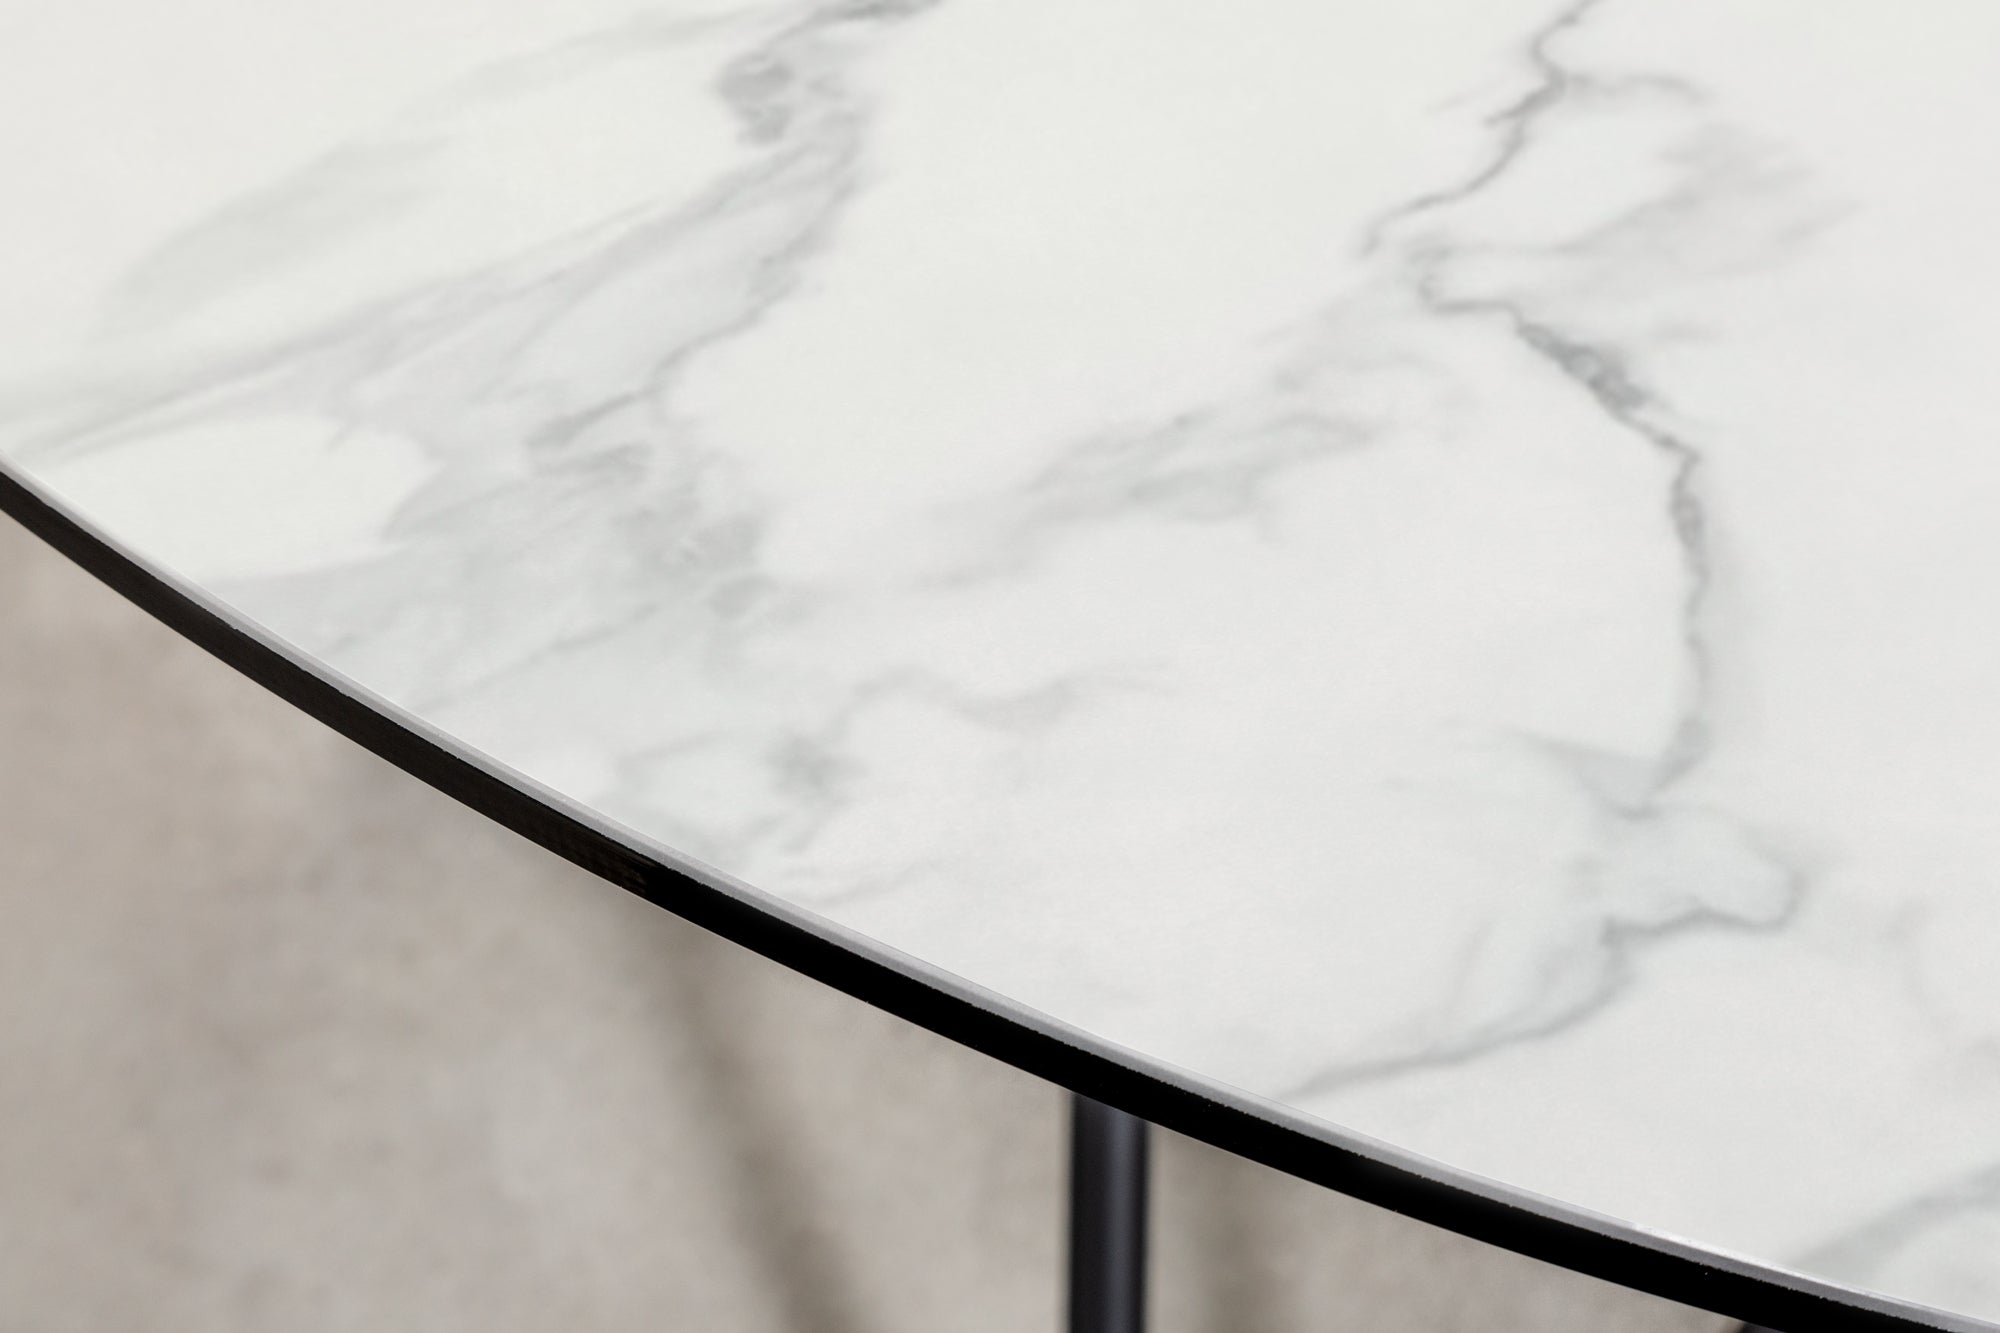 Dining Table Horizon 120cm Ceramics White Marble